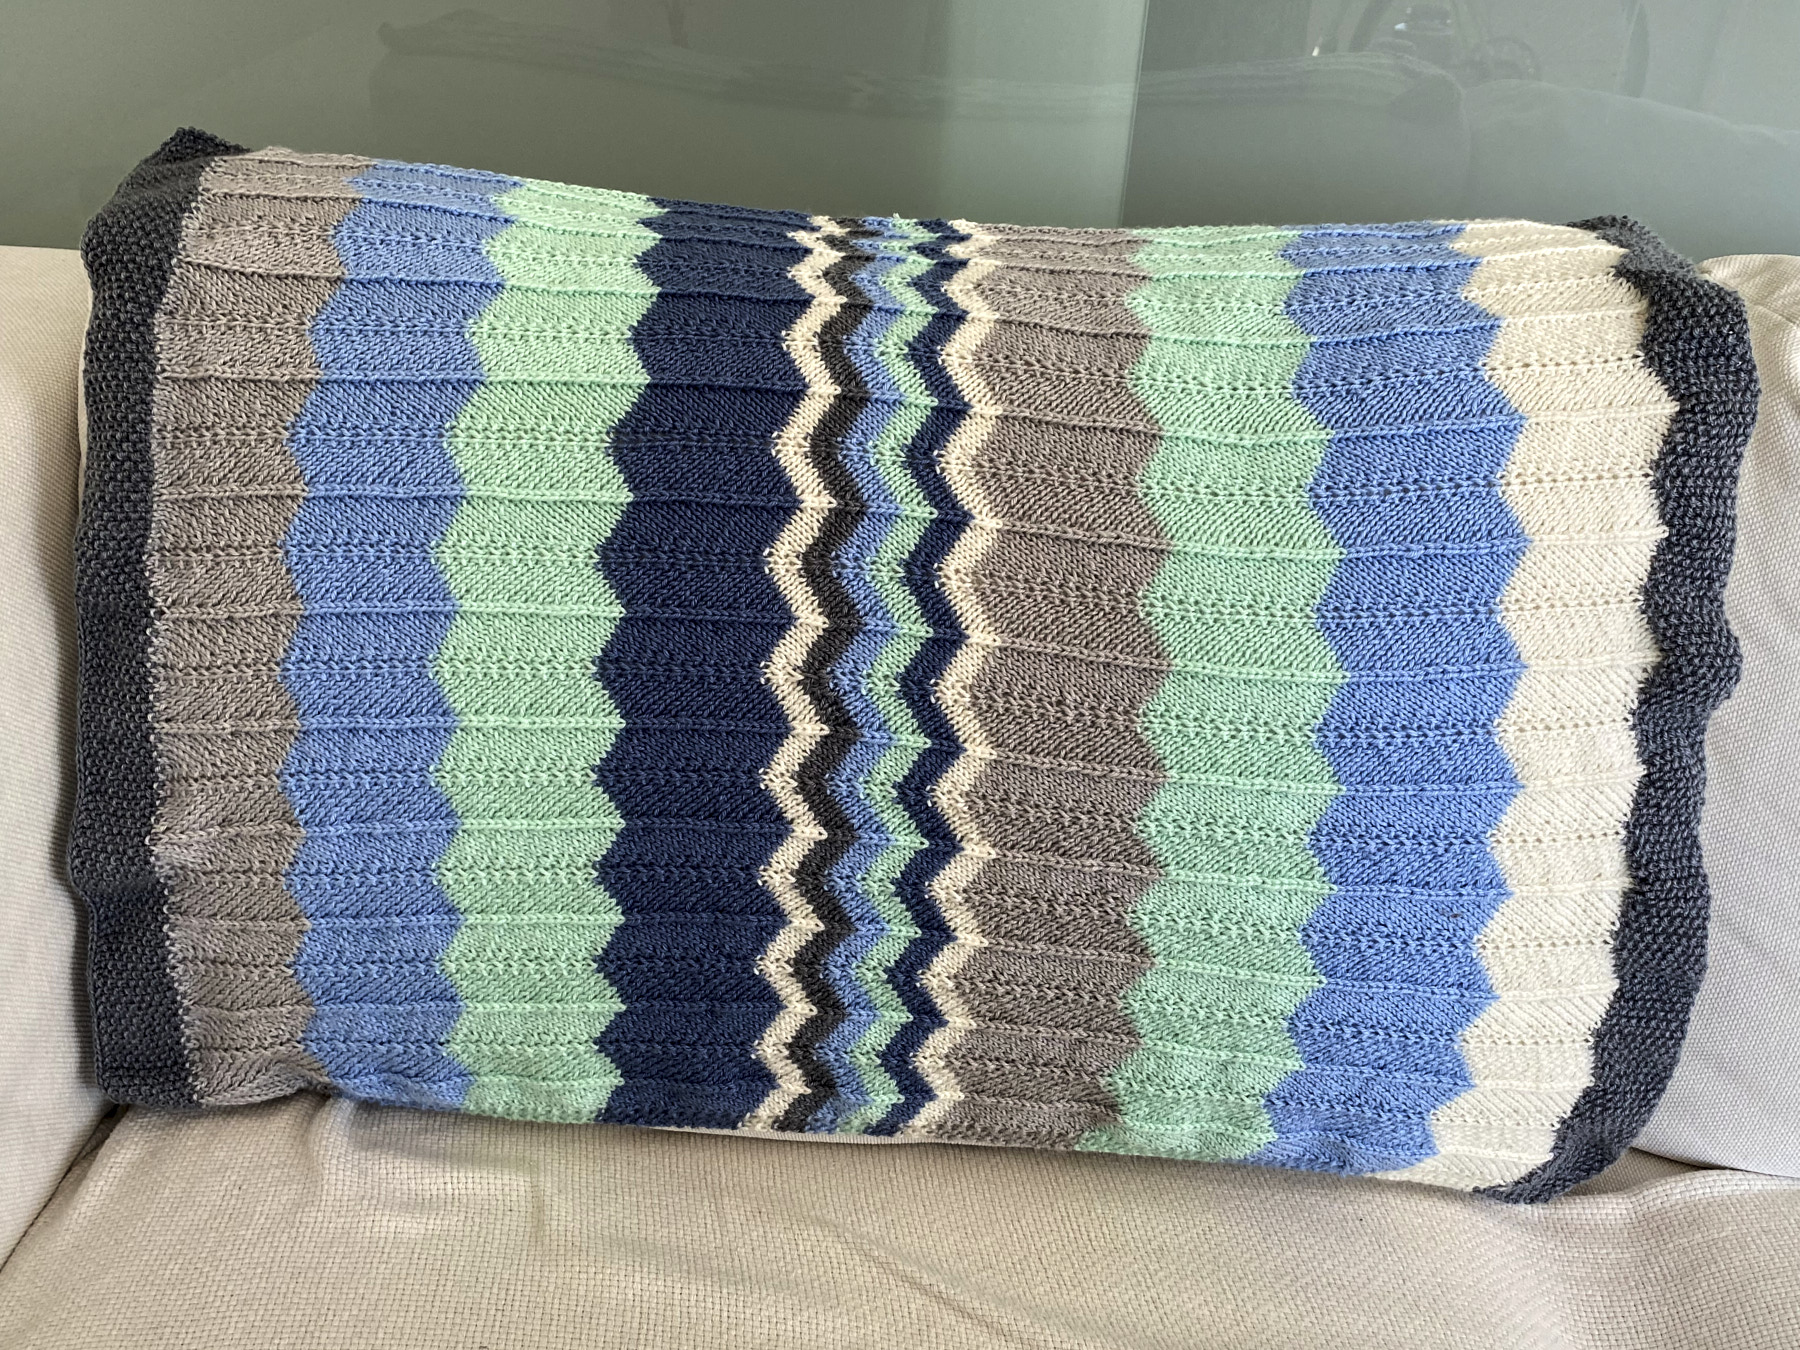 Chevron baby blanket in 5 colors